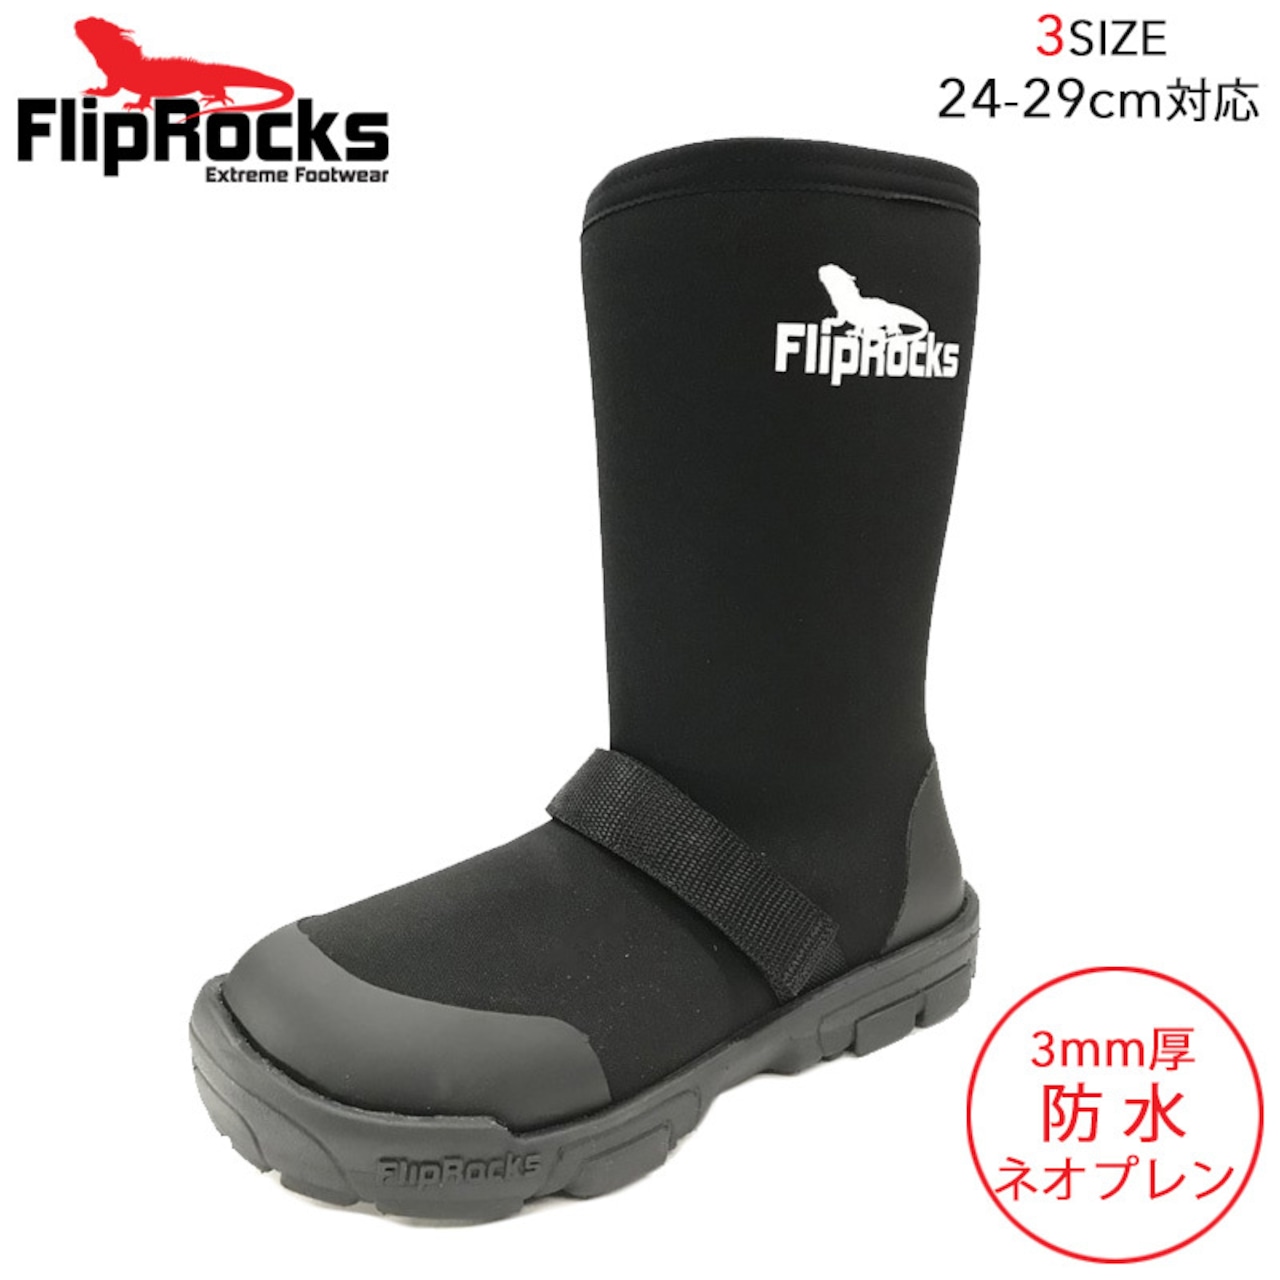 FlipRocks(フリップロックス) ネオプレンブーティ ブーツ 防水 スポーツサンダル トレッキングシューズ アウトドア 用品 キャンプ グッズ